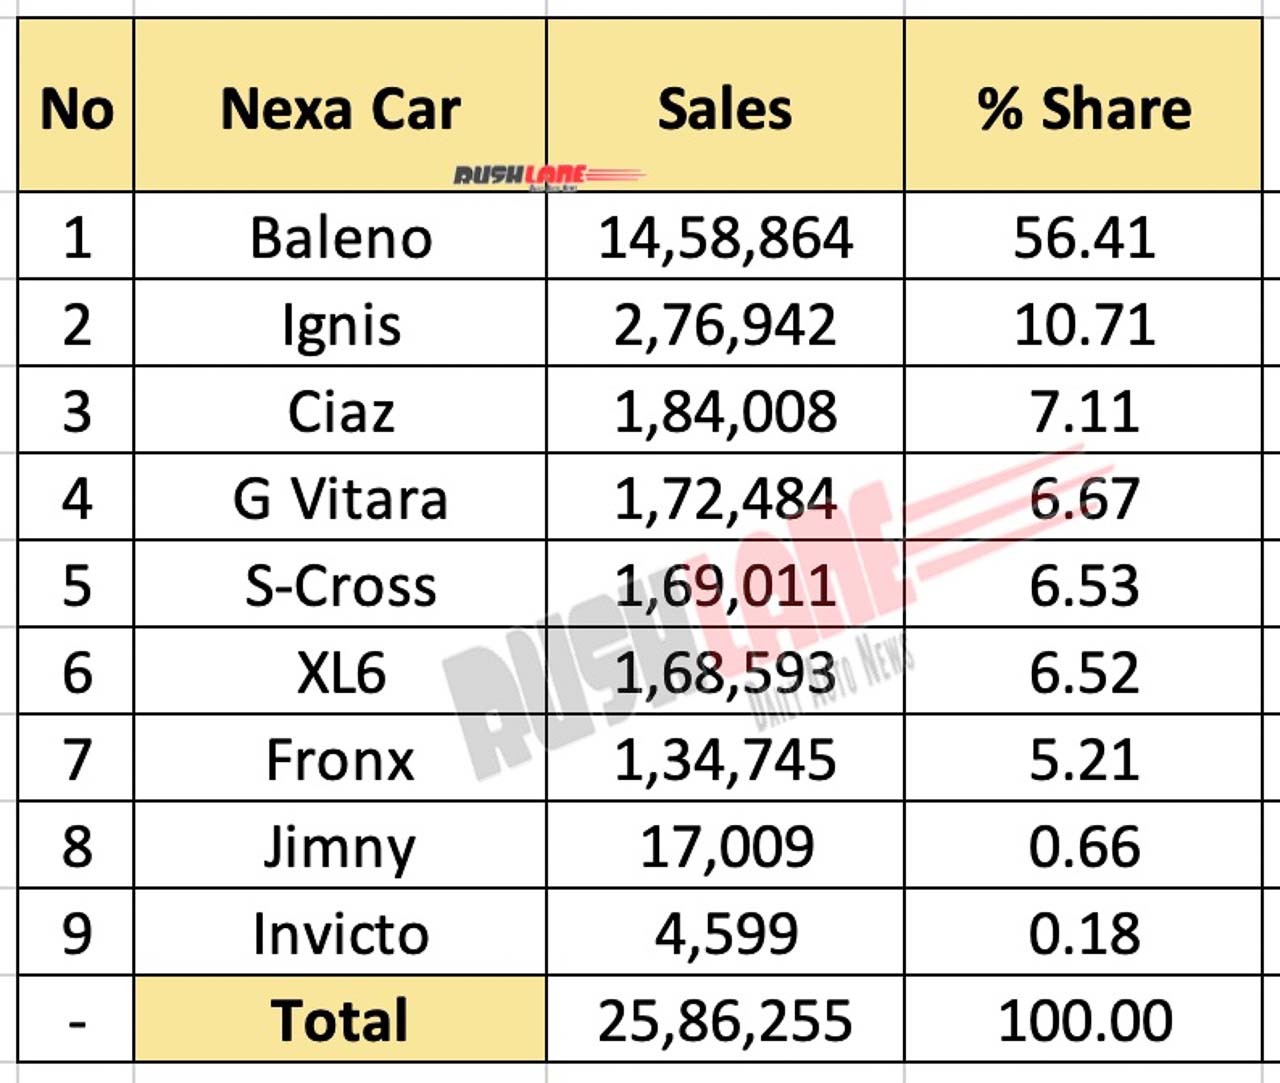 Maruti Nexa Car Sales Cross 25 Lakh